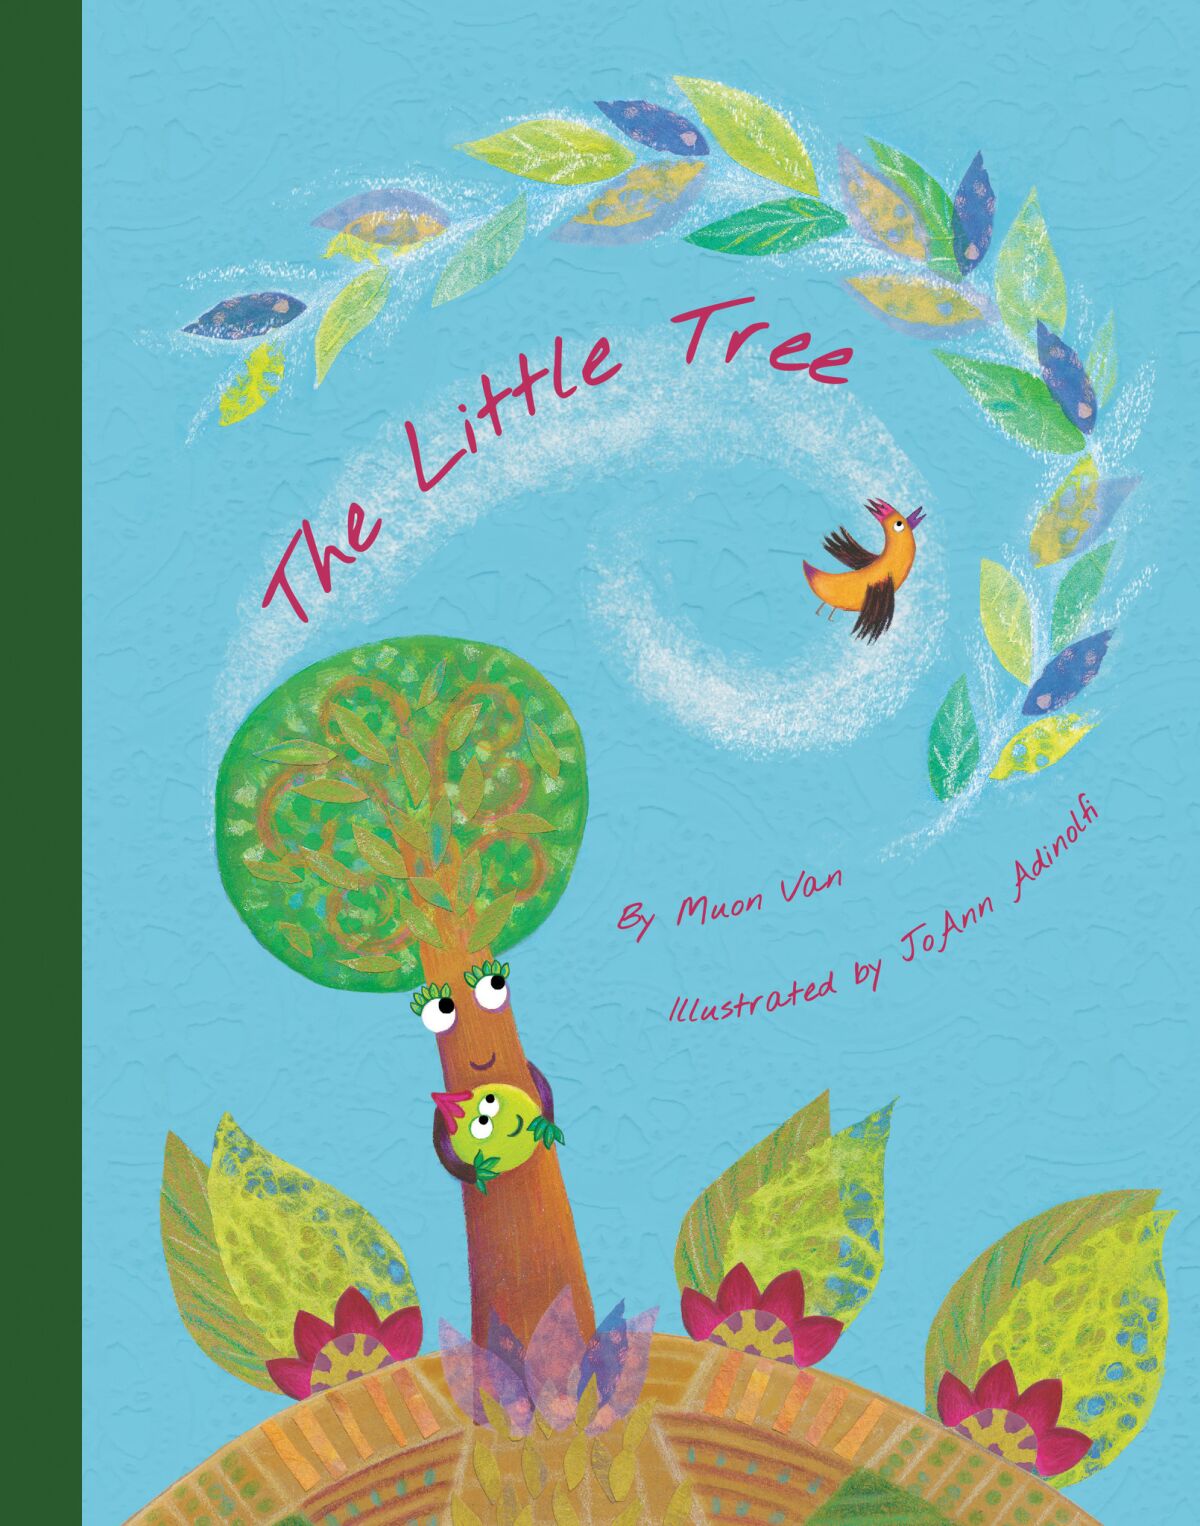 "The Little Tree" by Muon Van